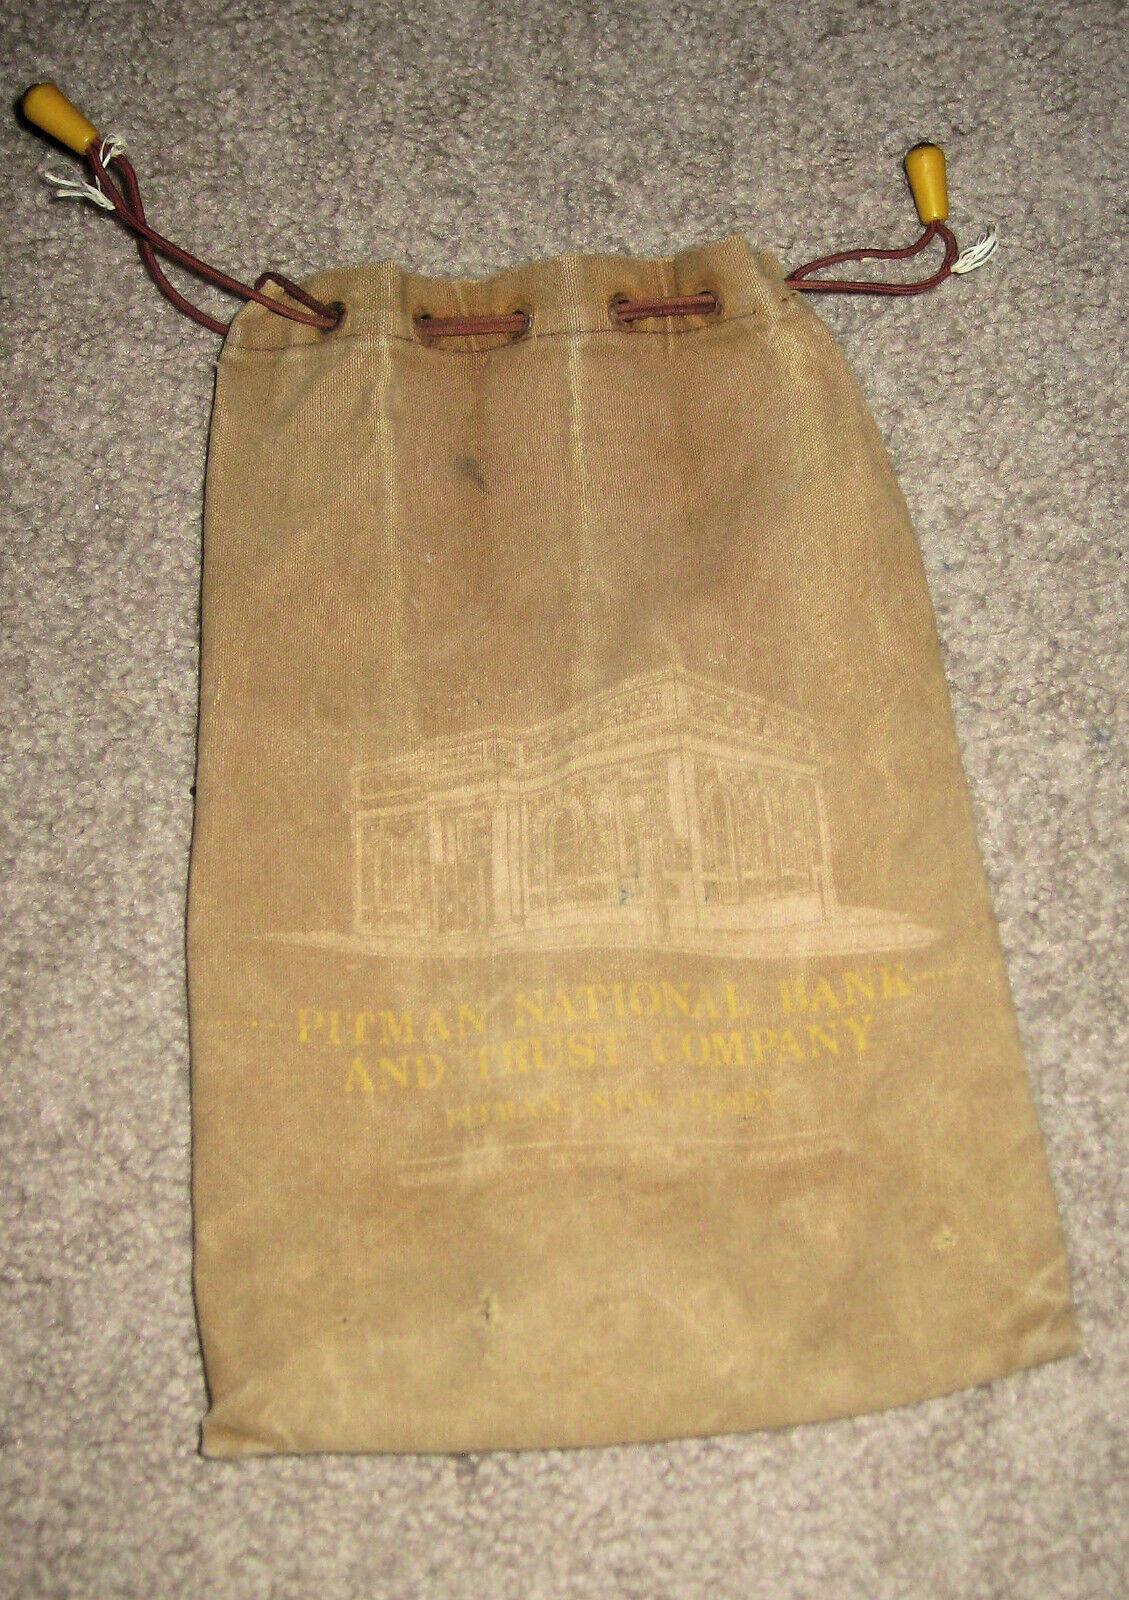 Vintage Pitman National Bank and Trust Company Bag / Pitman New Jersey NJ